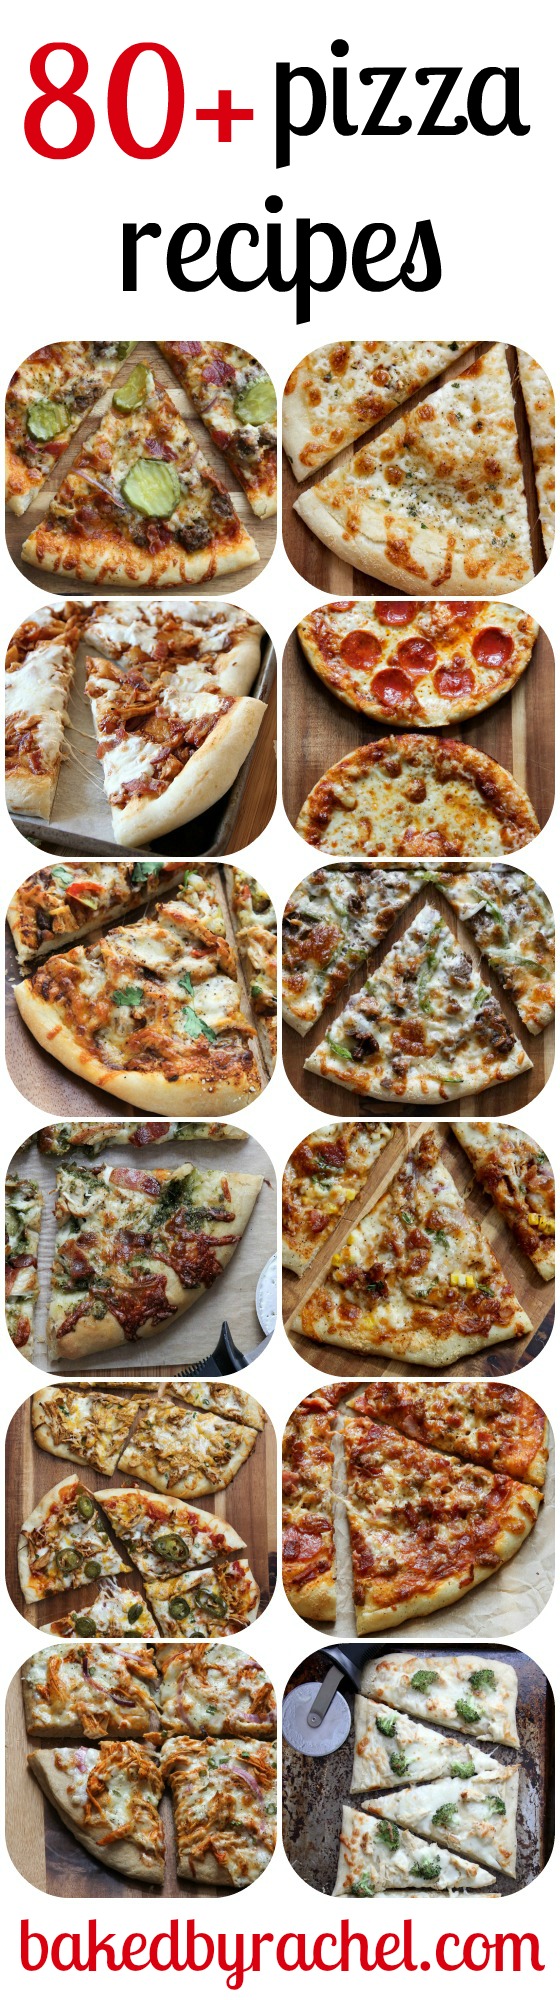 80+ homemade pizza recipes on bakedbyrachel.com